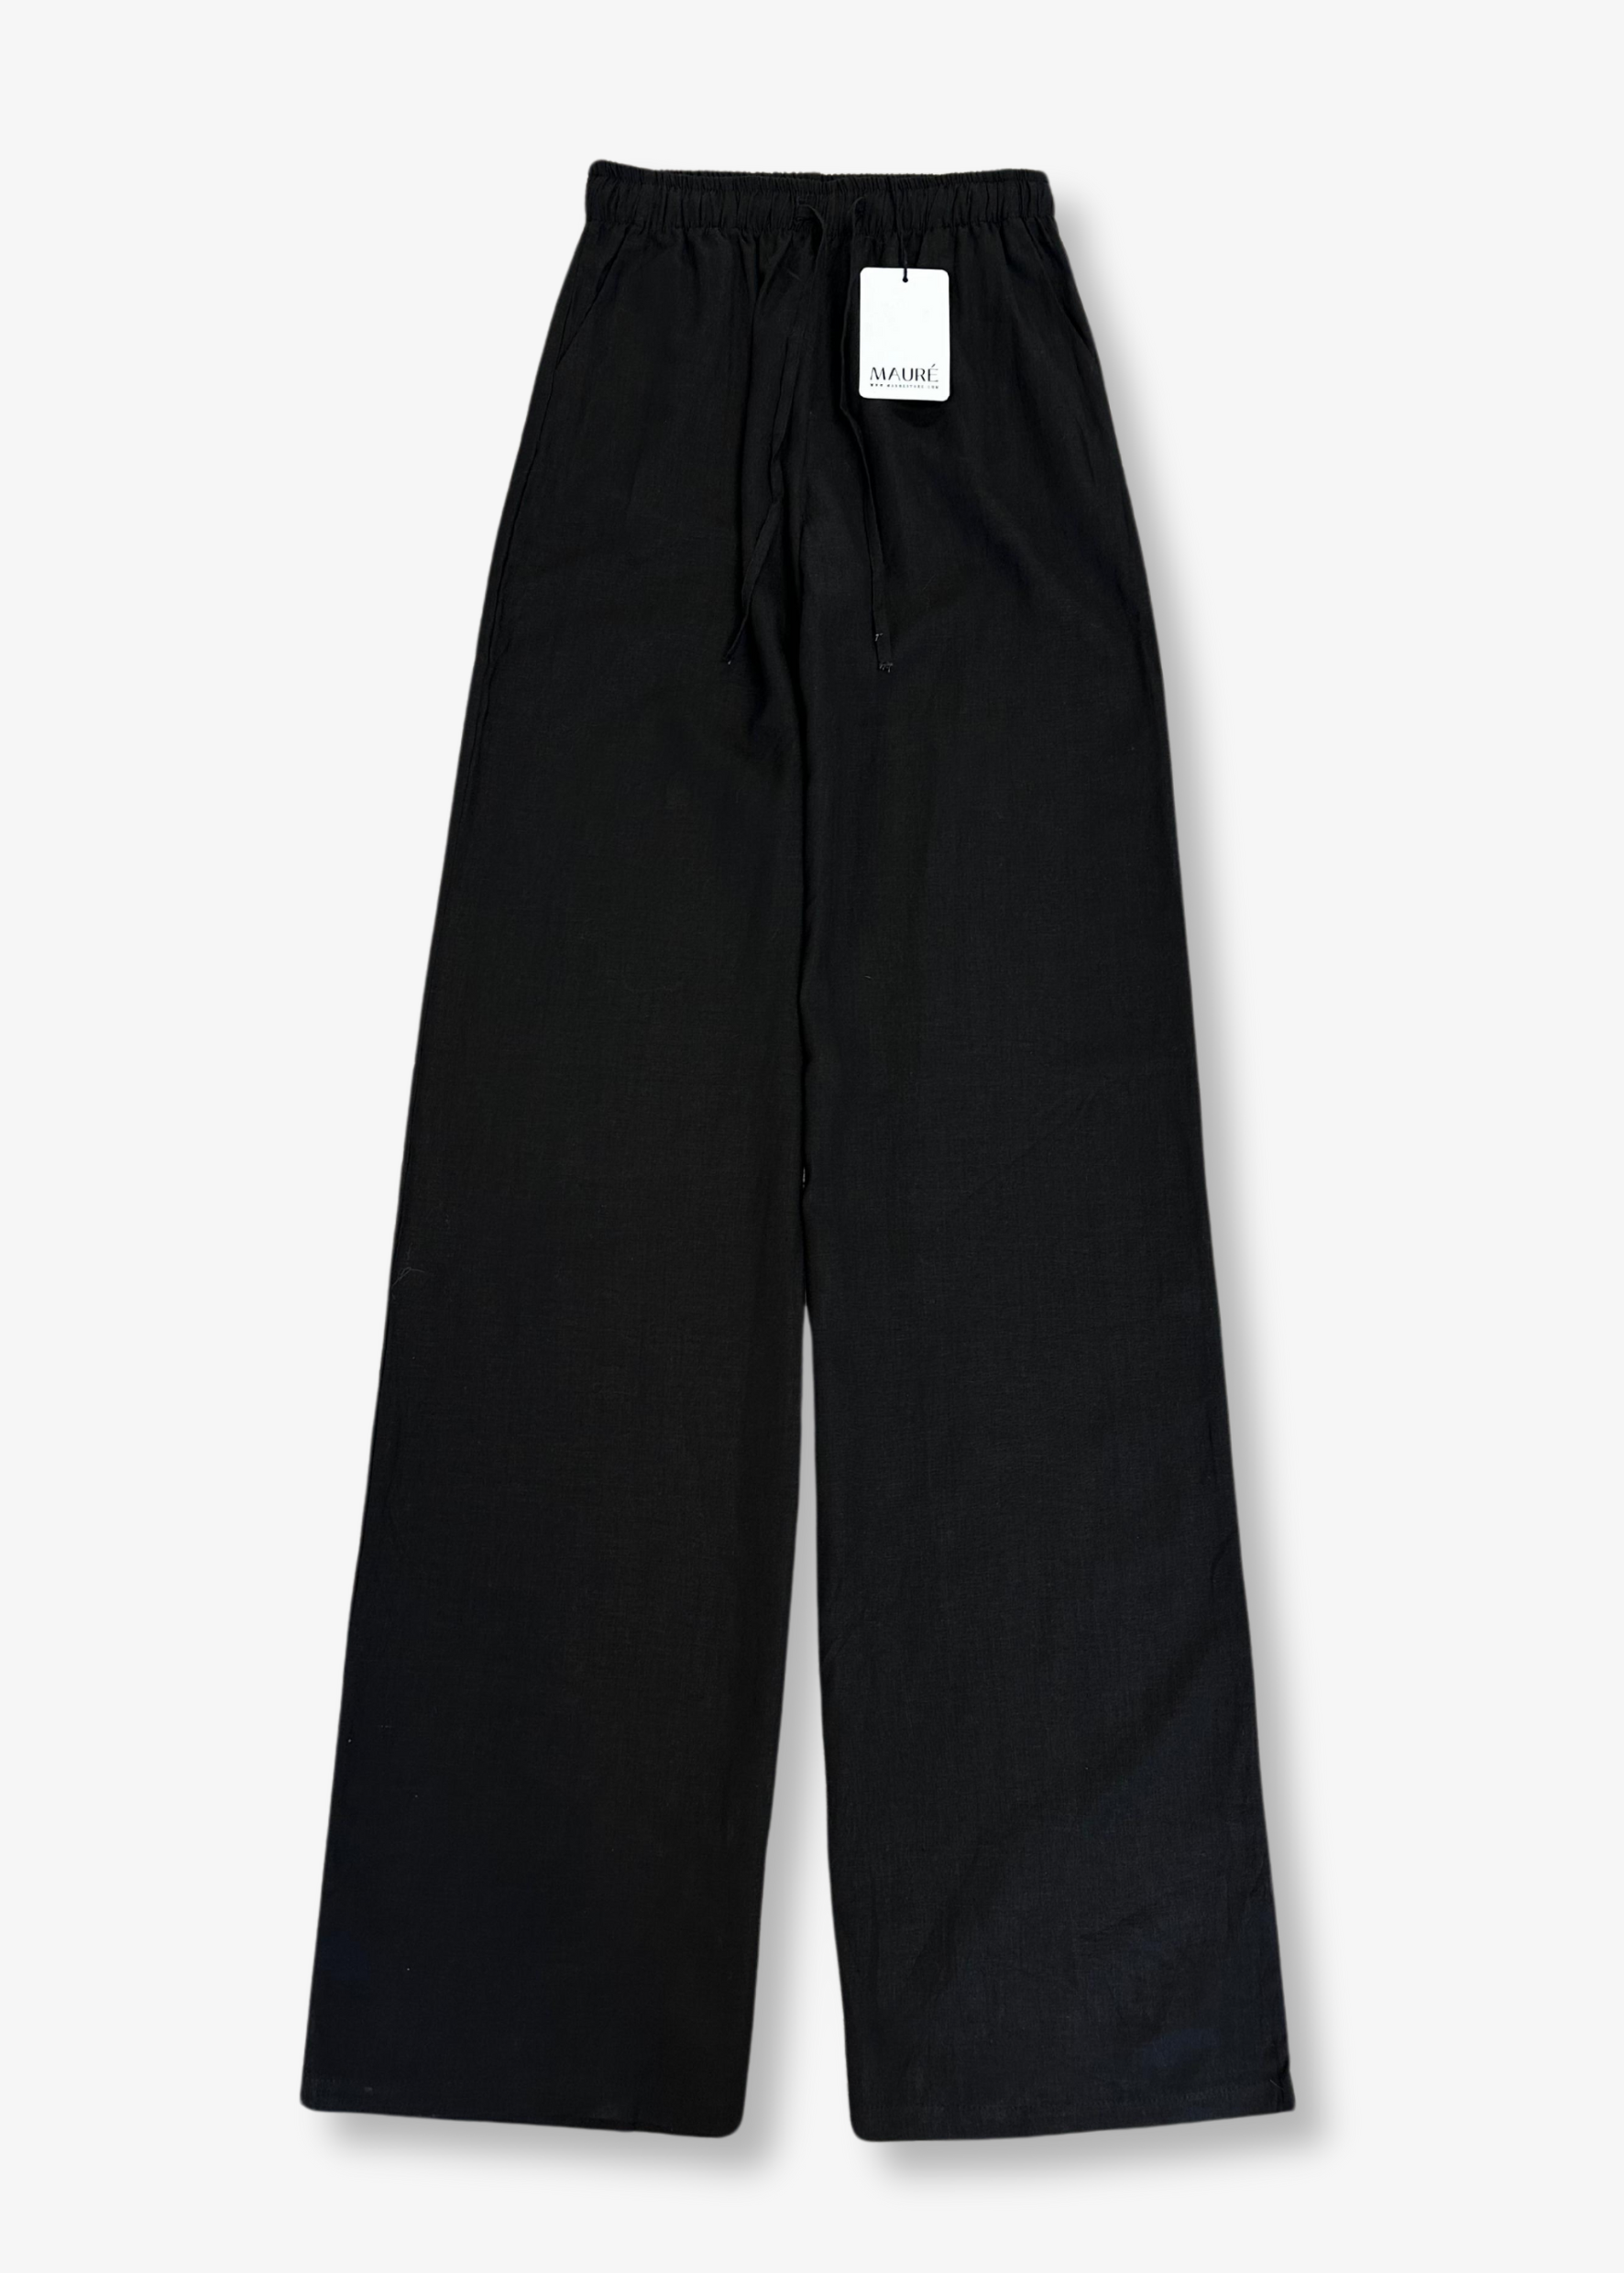 Linnen pants (TALL) black